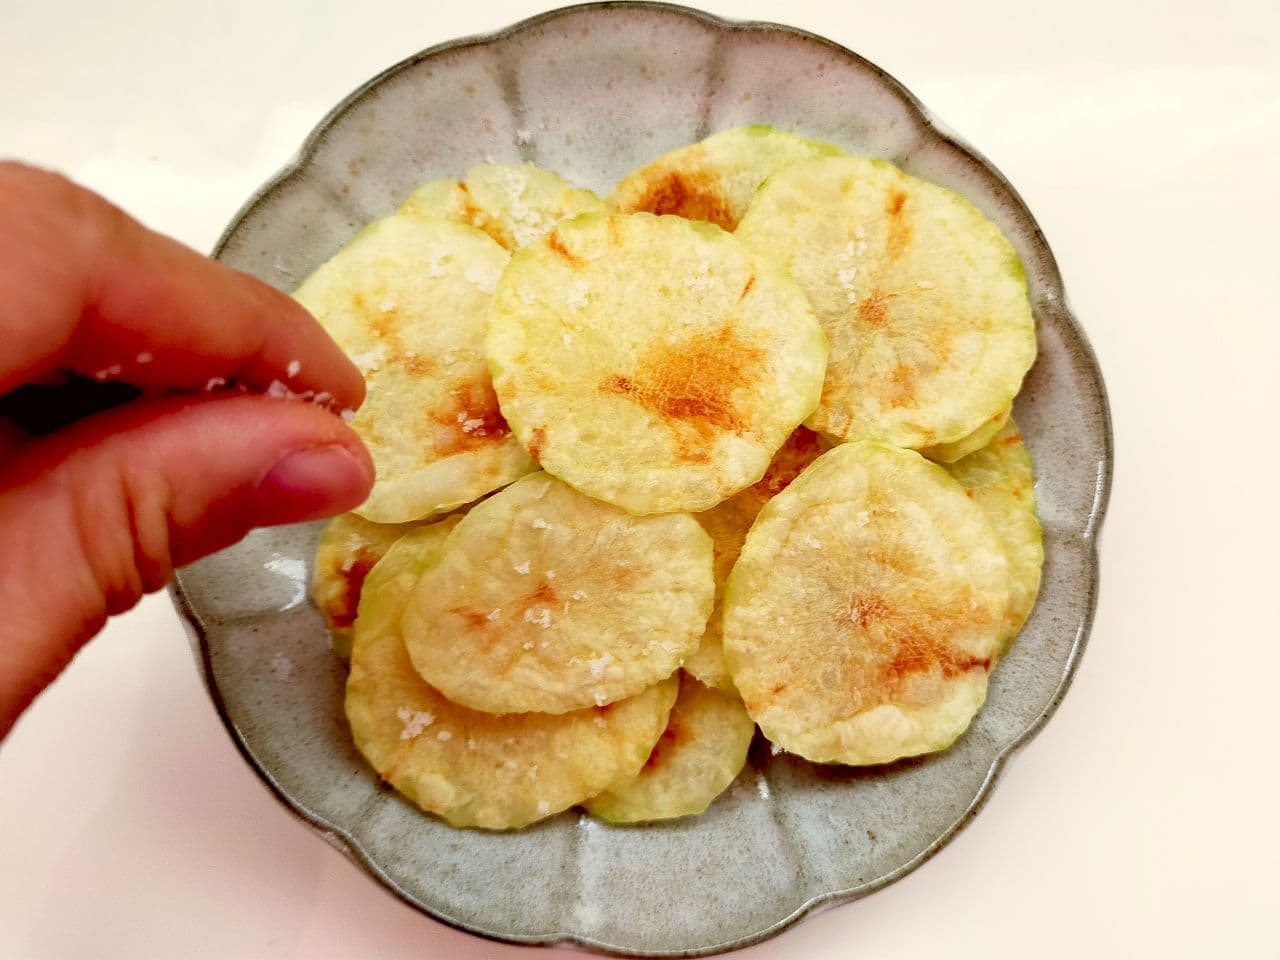 Microwave "No-Fry Potato Chips" Recipe